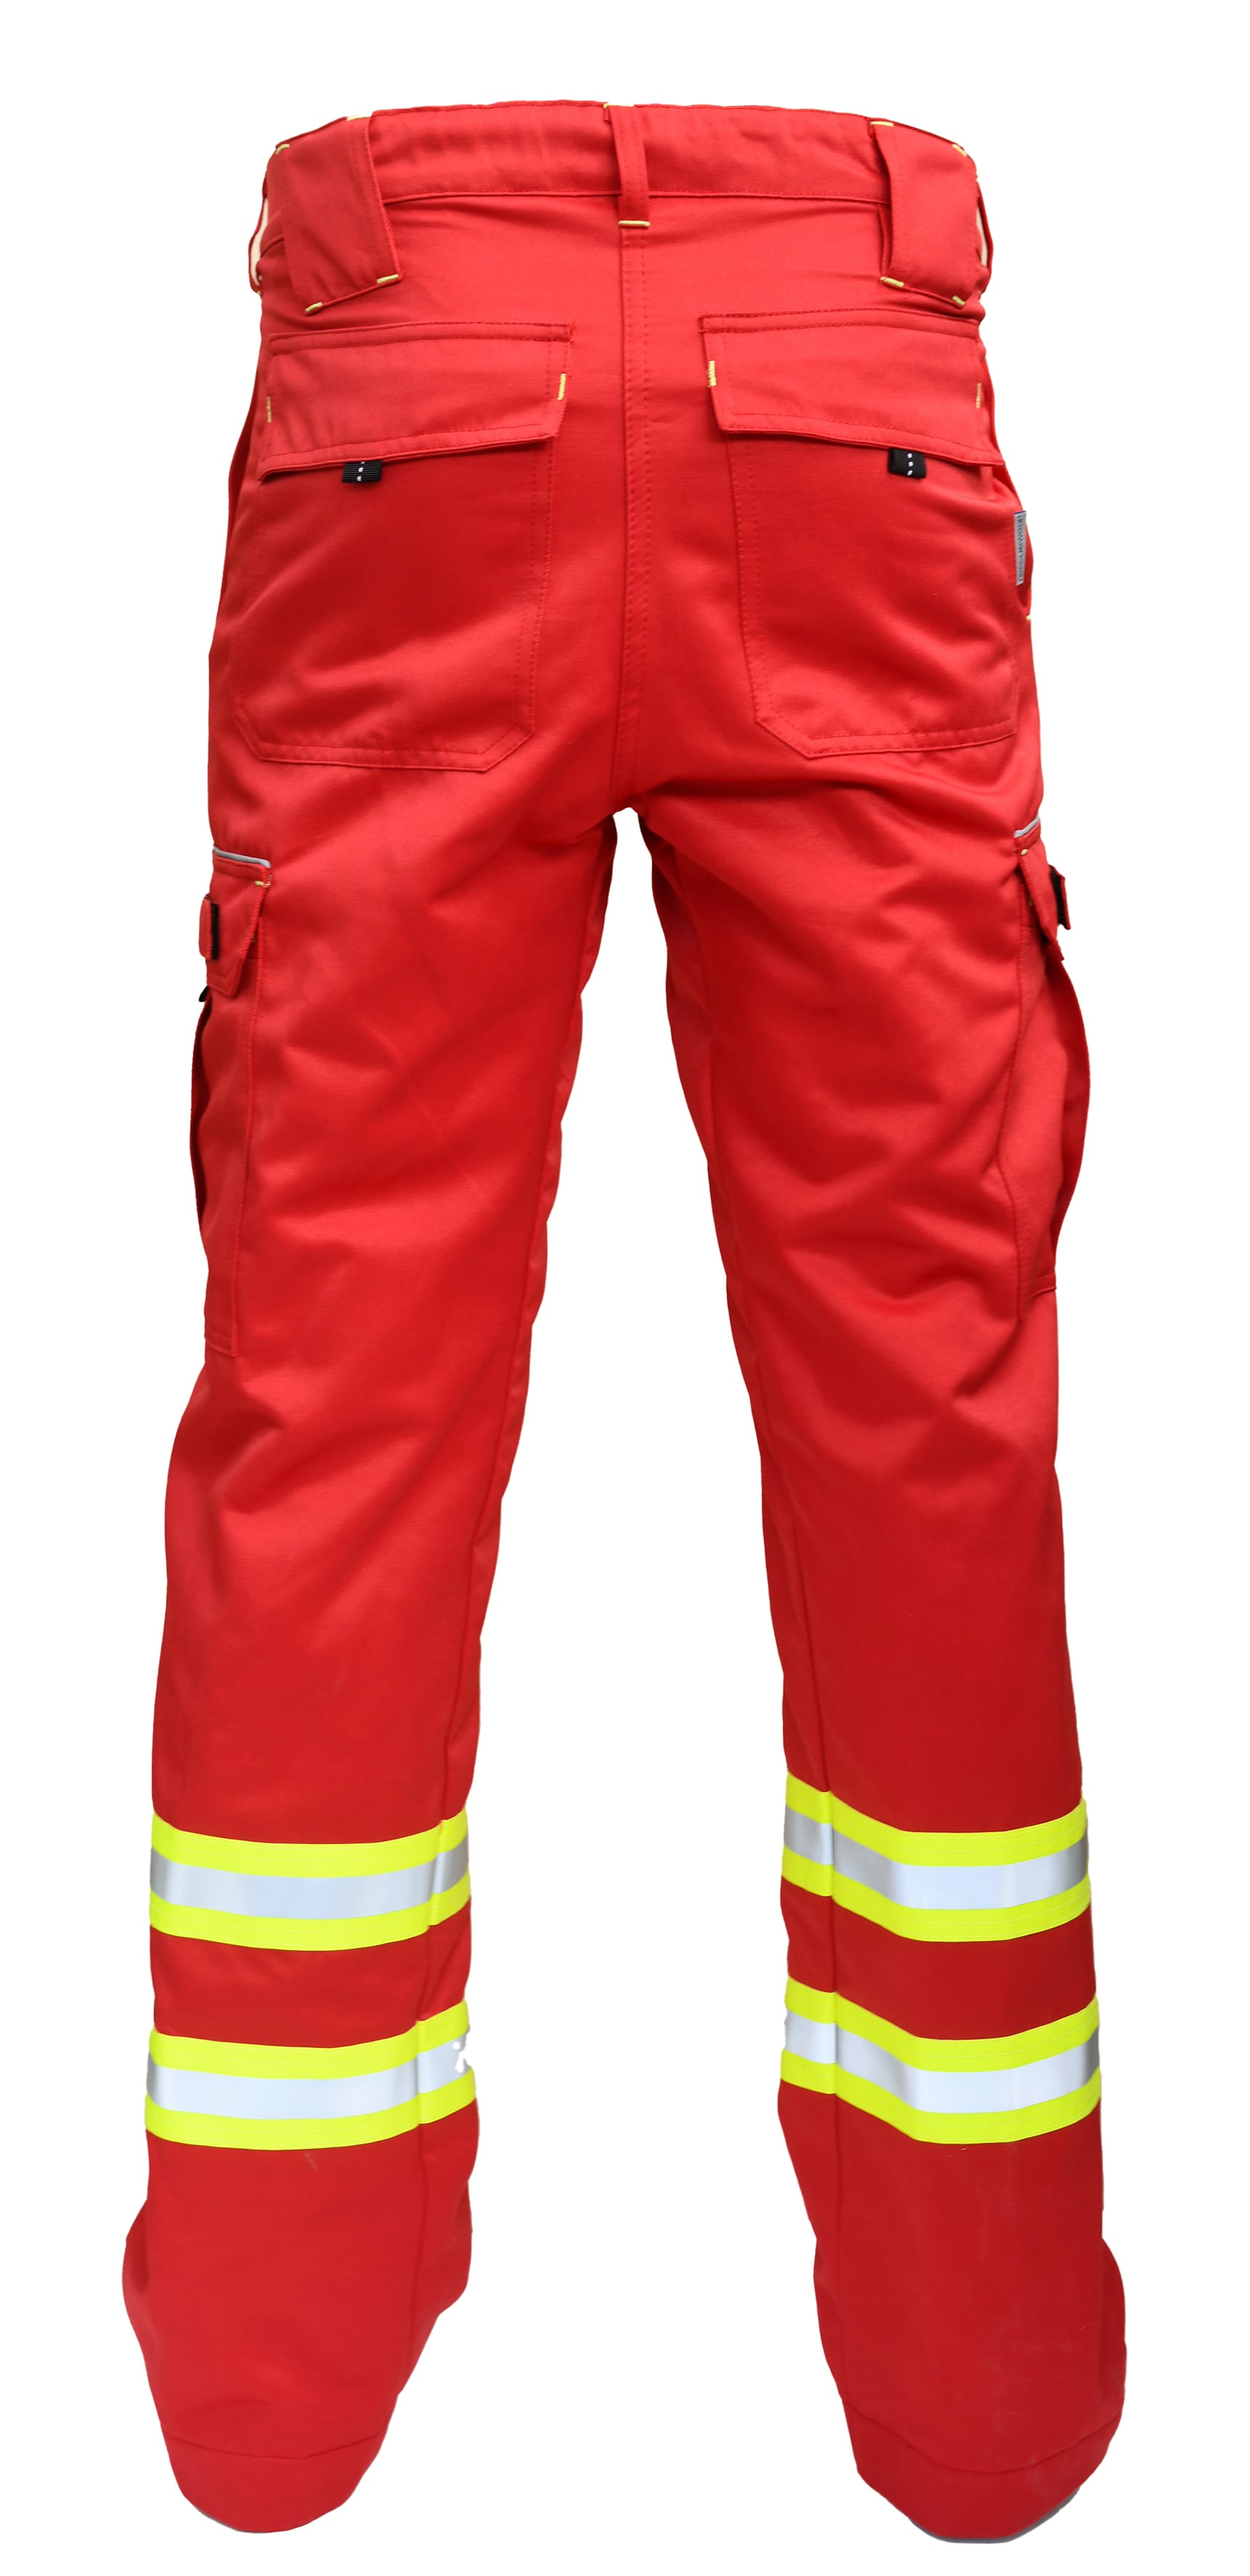 Rescuewear Unisex Hose Wasserrettung Rot - 56